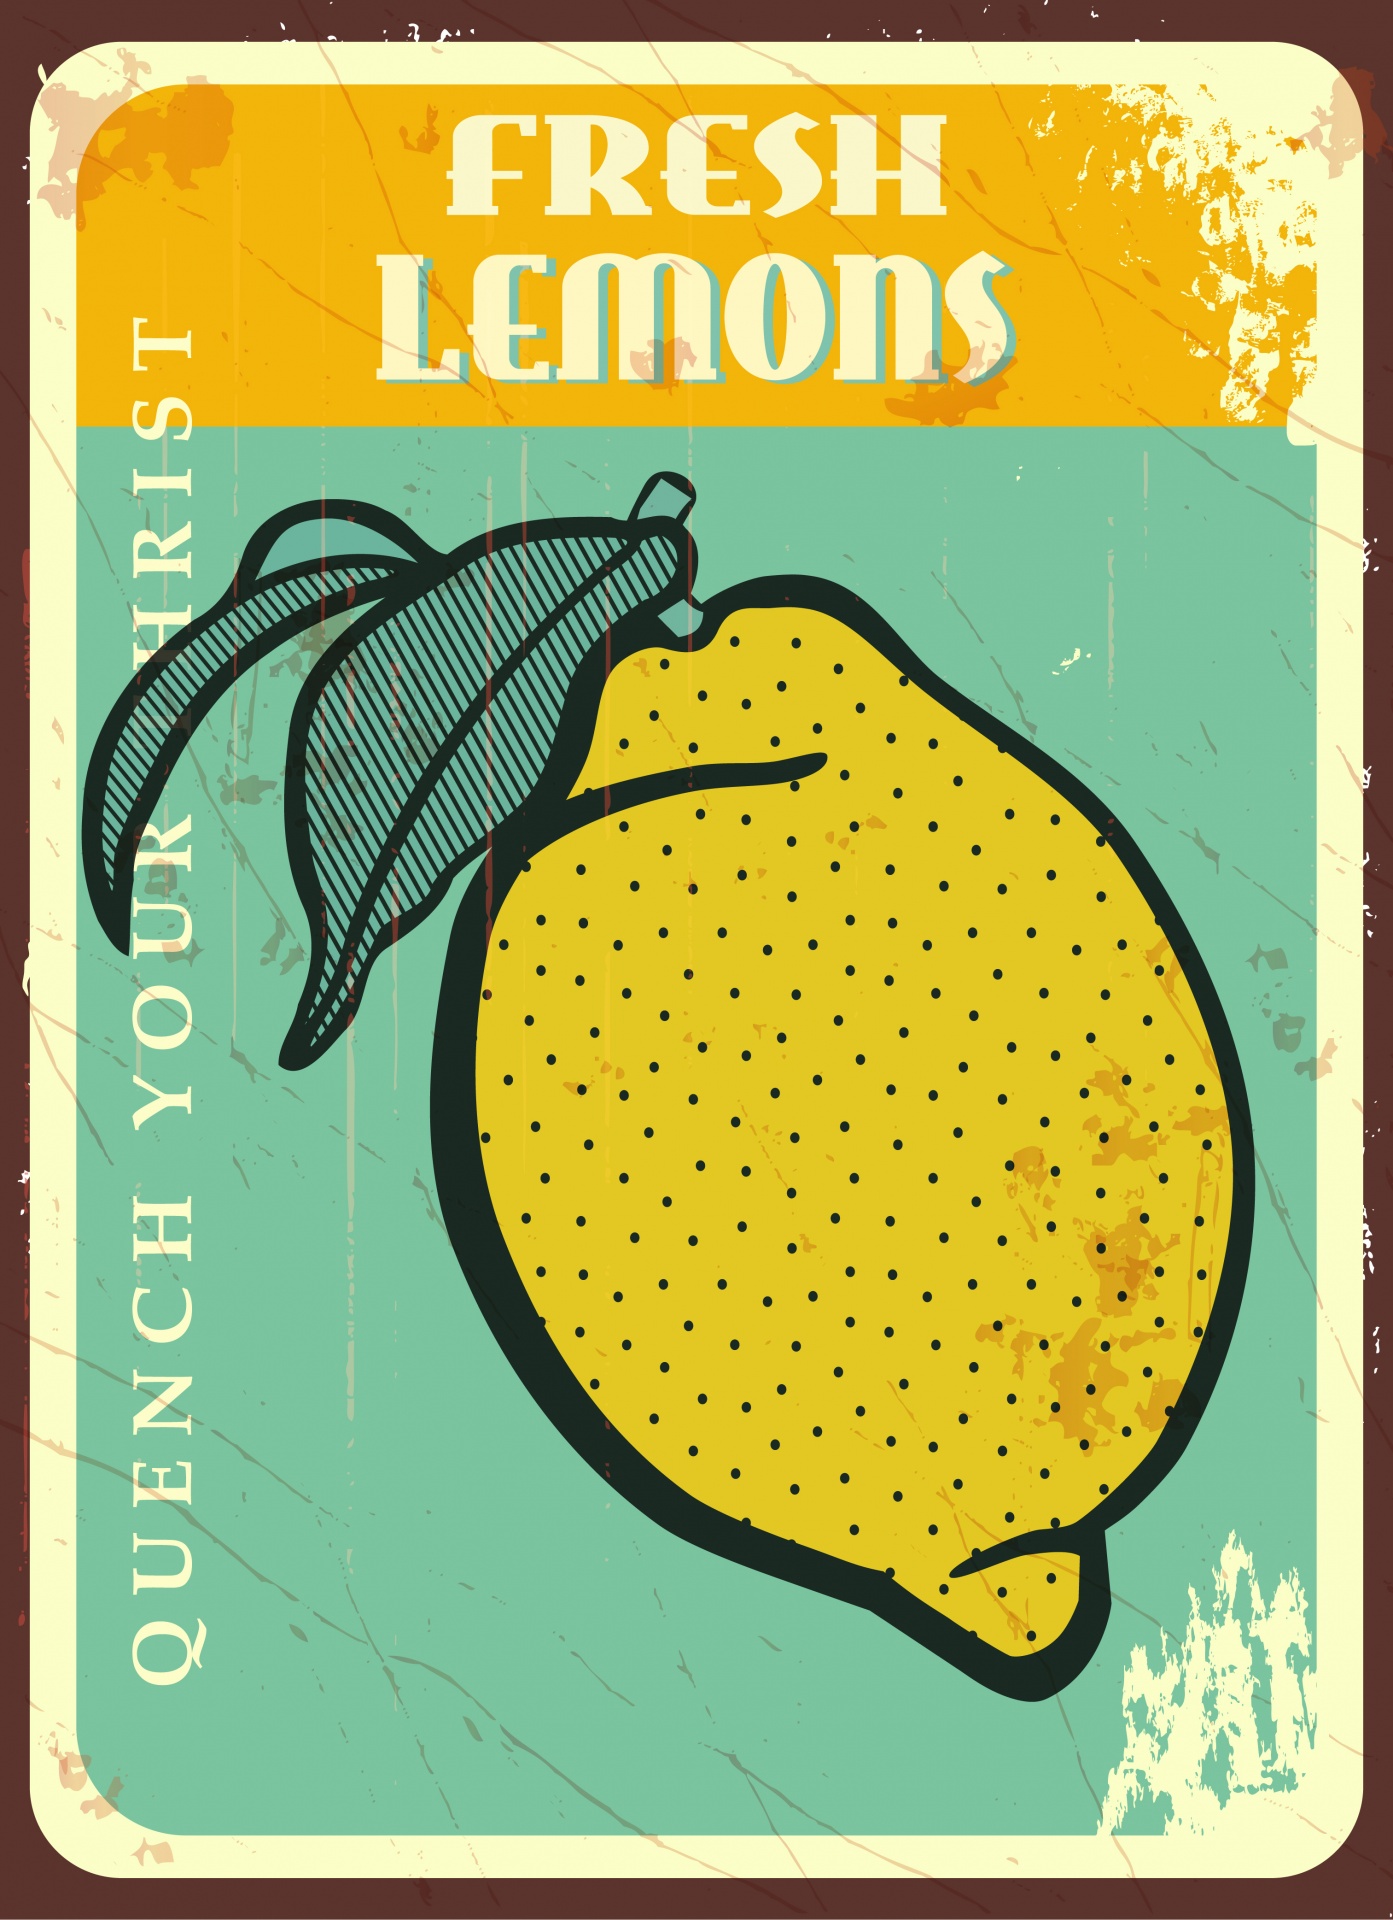 Cartel de cartel vintage de limones